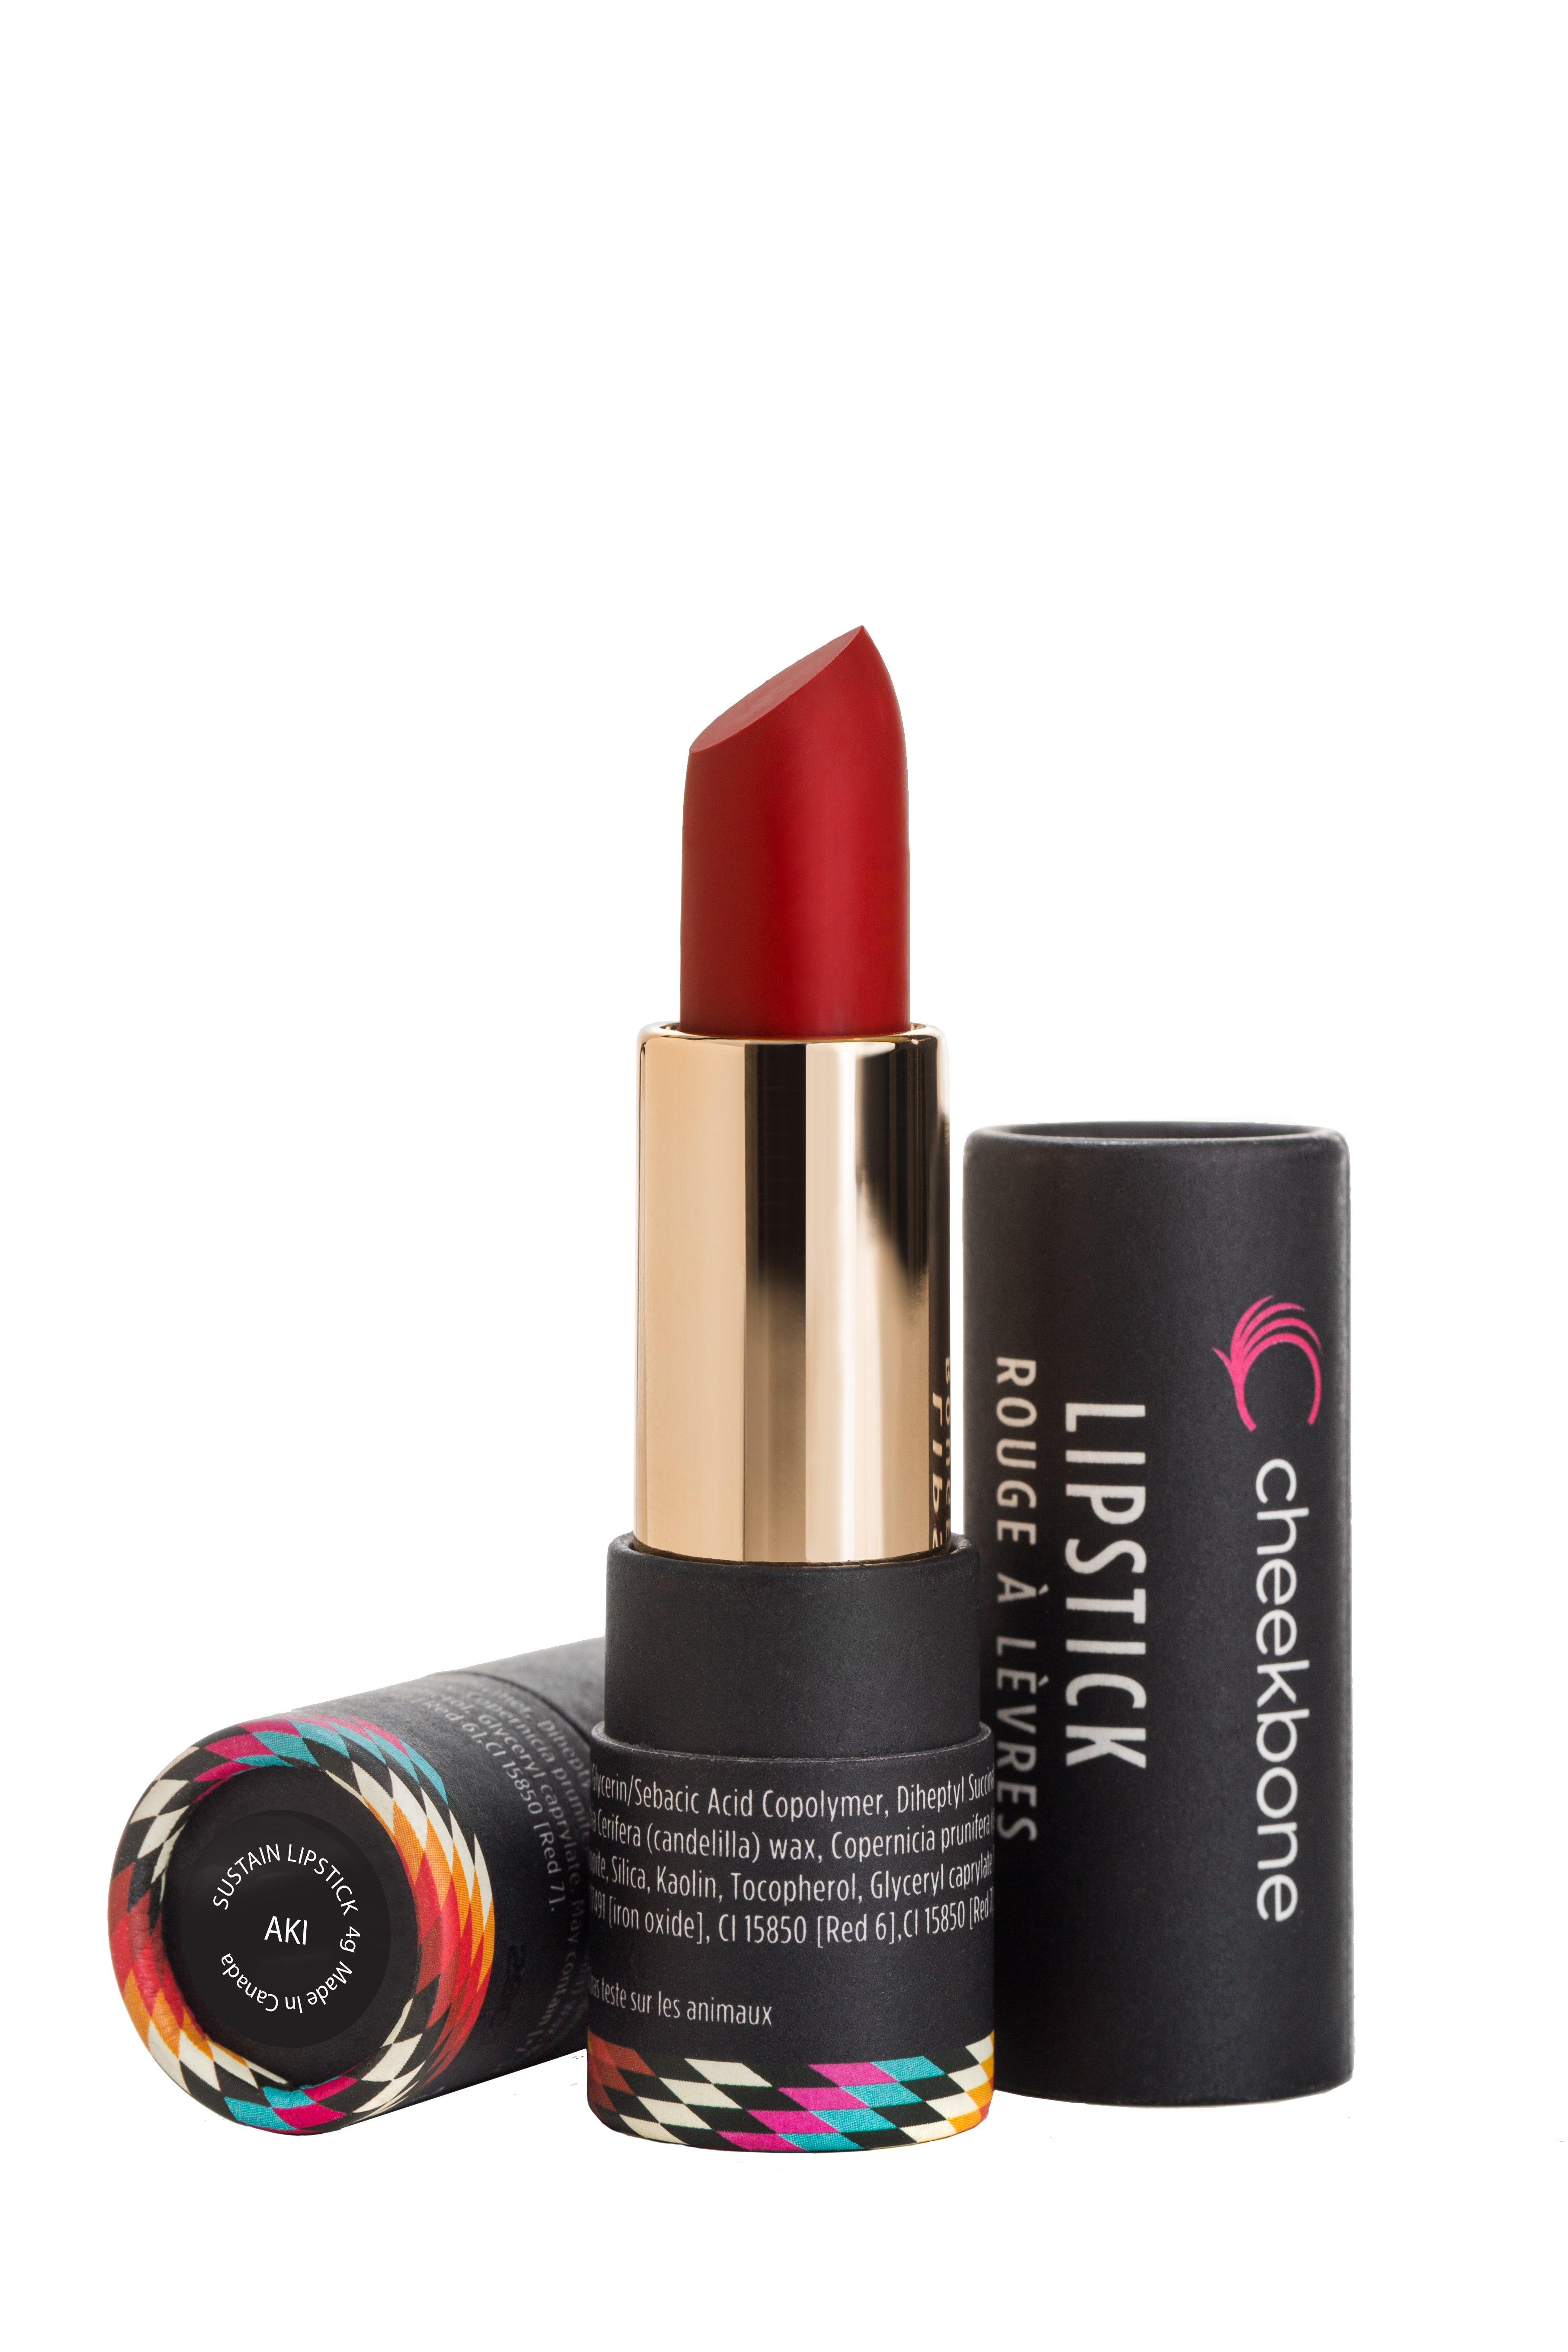 Cheekbone Beauty + Liquid Lipstick in Ashley